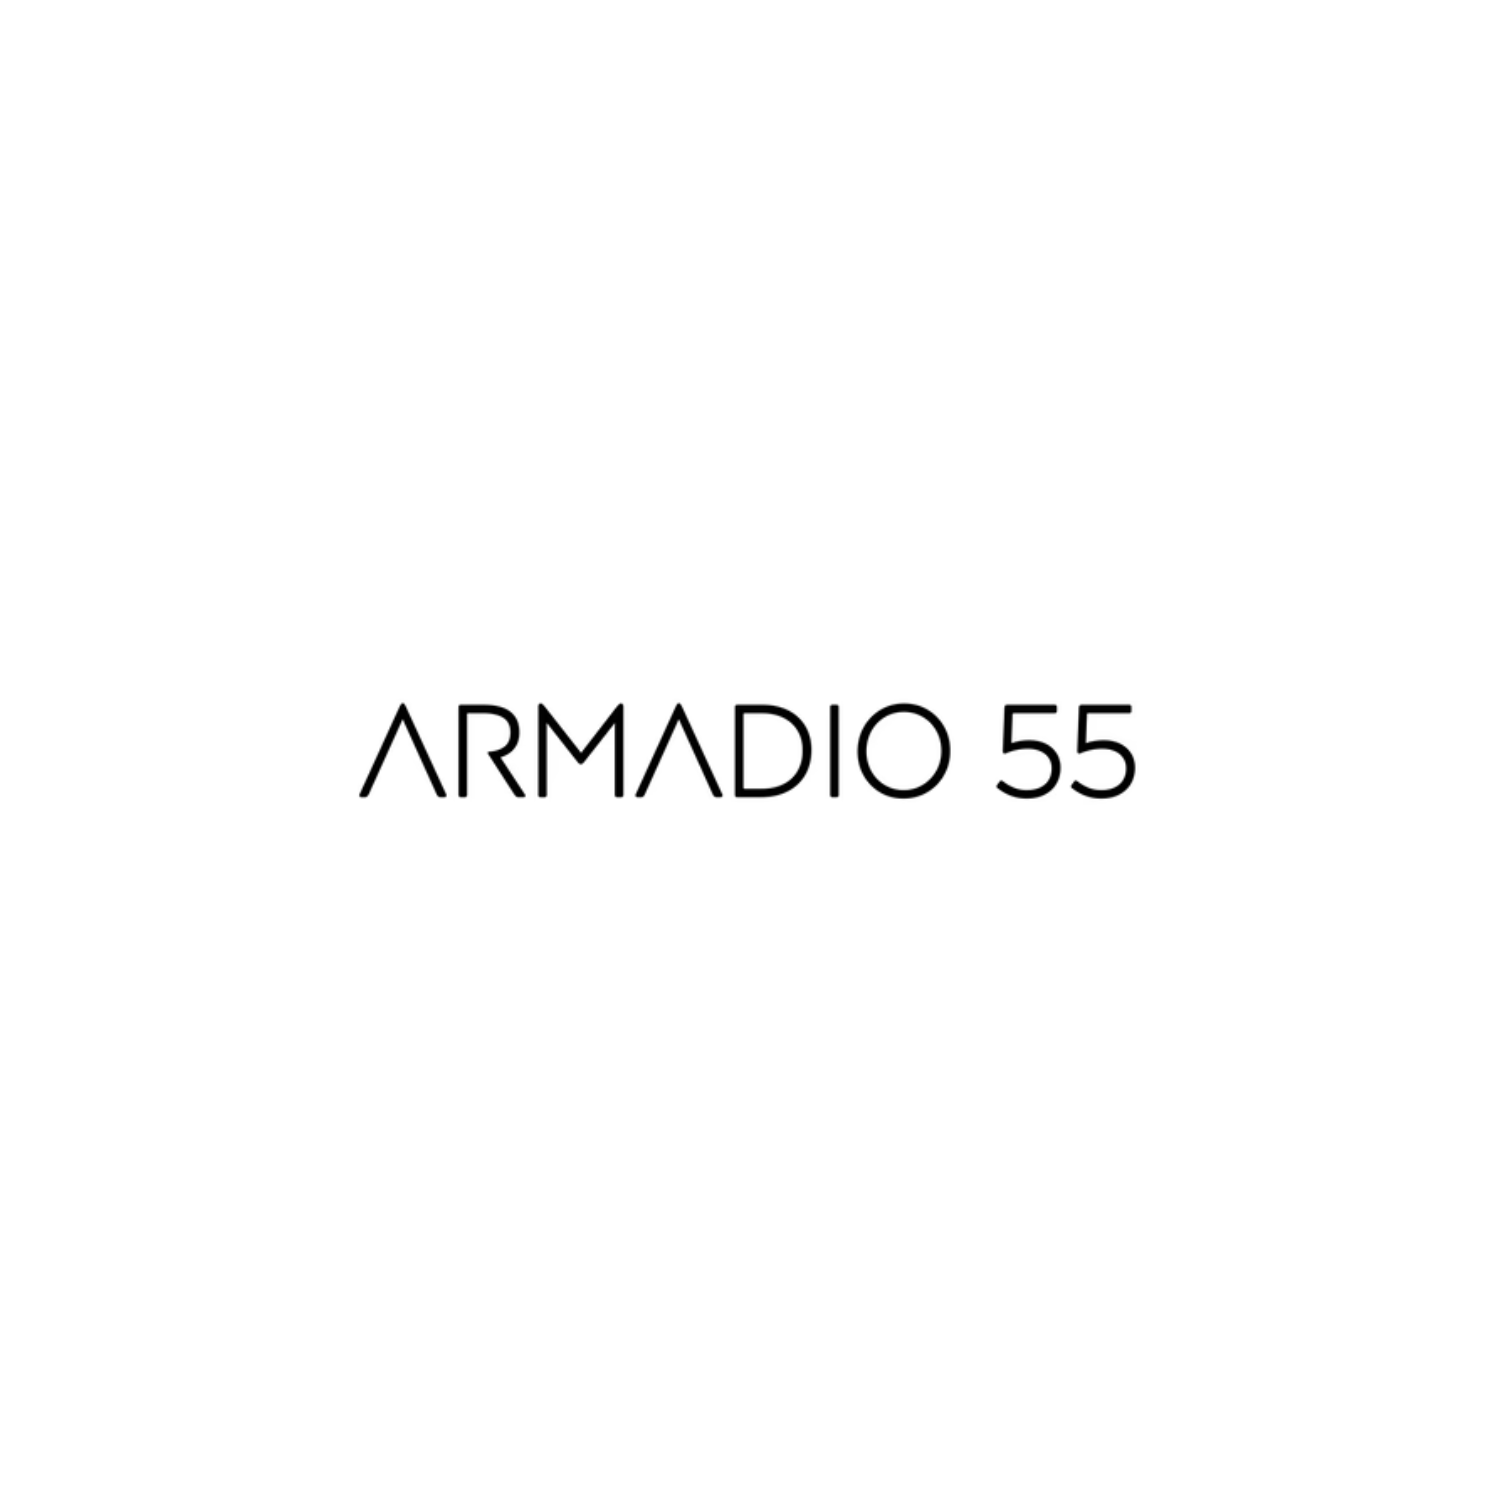 armadio-55-carloapp-monaco-commercant-pret-a-porter